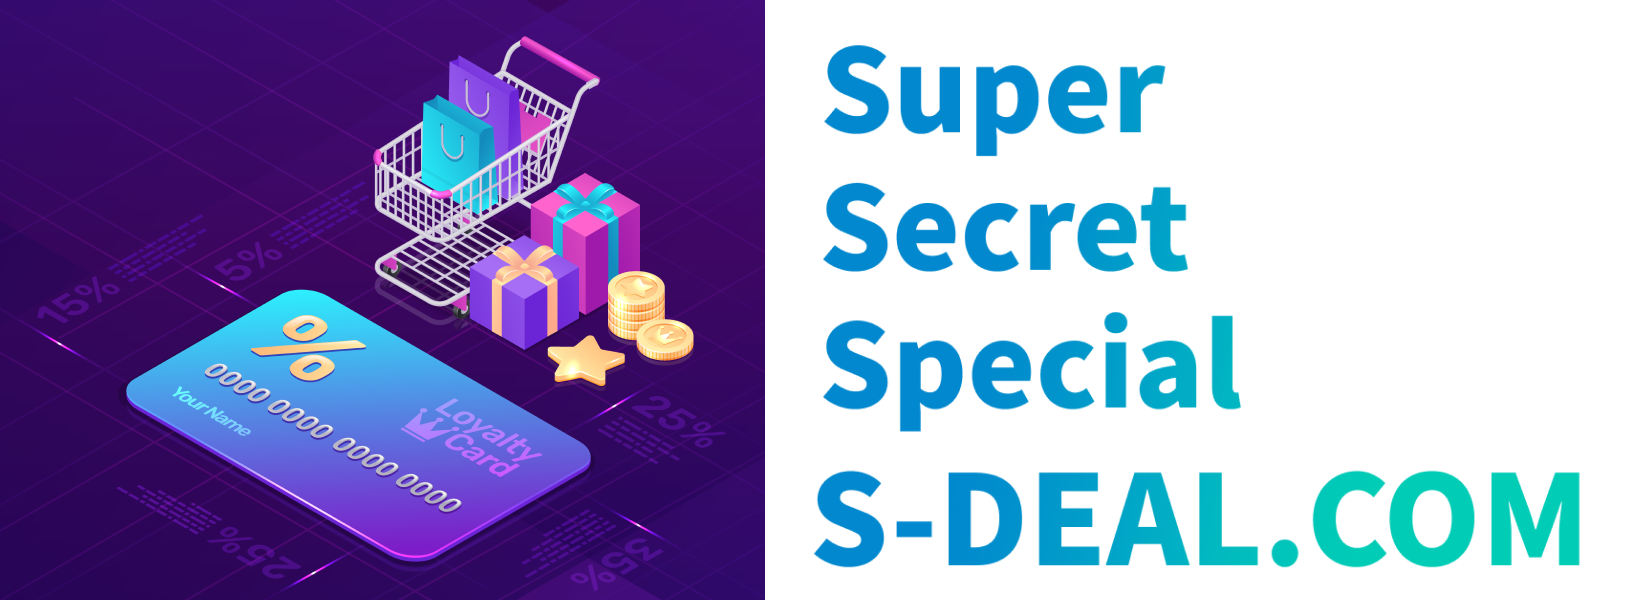 Super Secret Special S-DEAL.COM